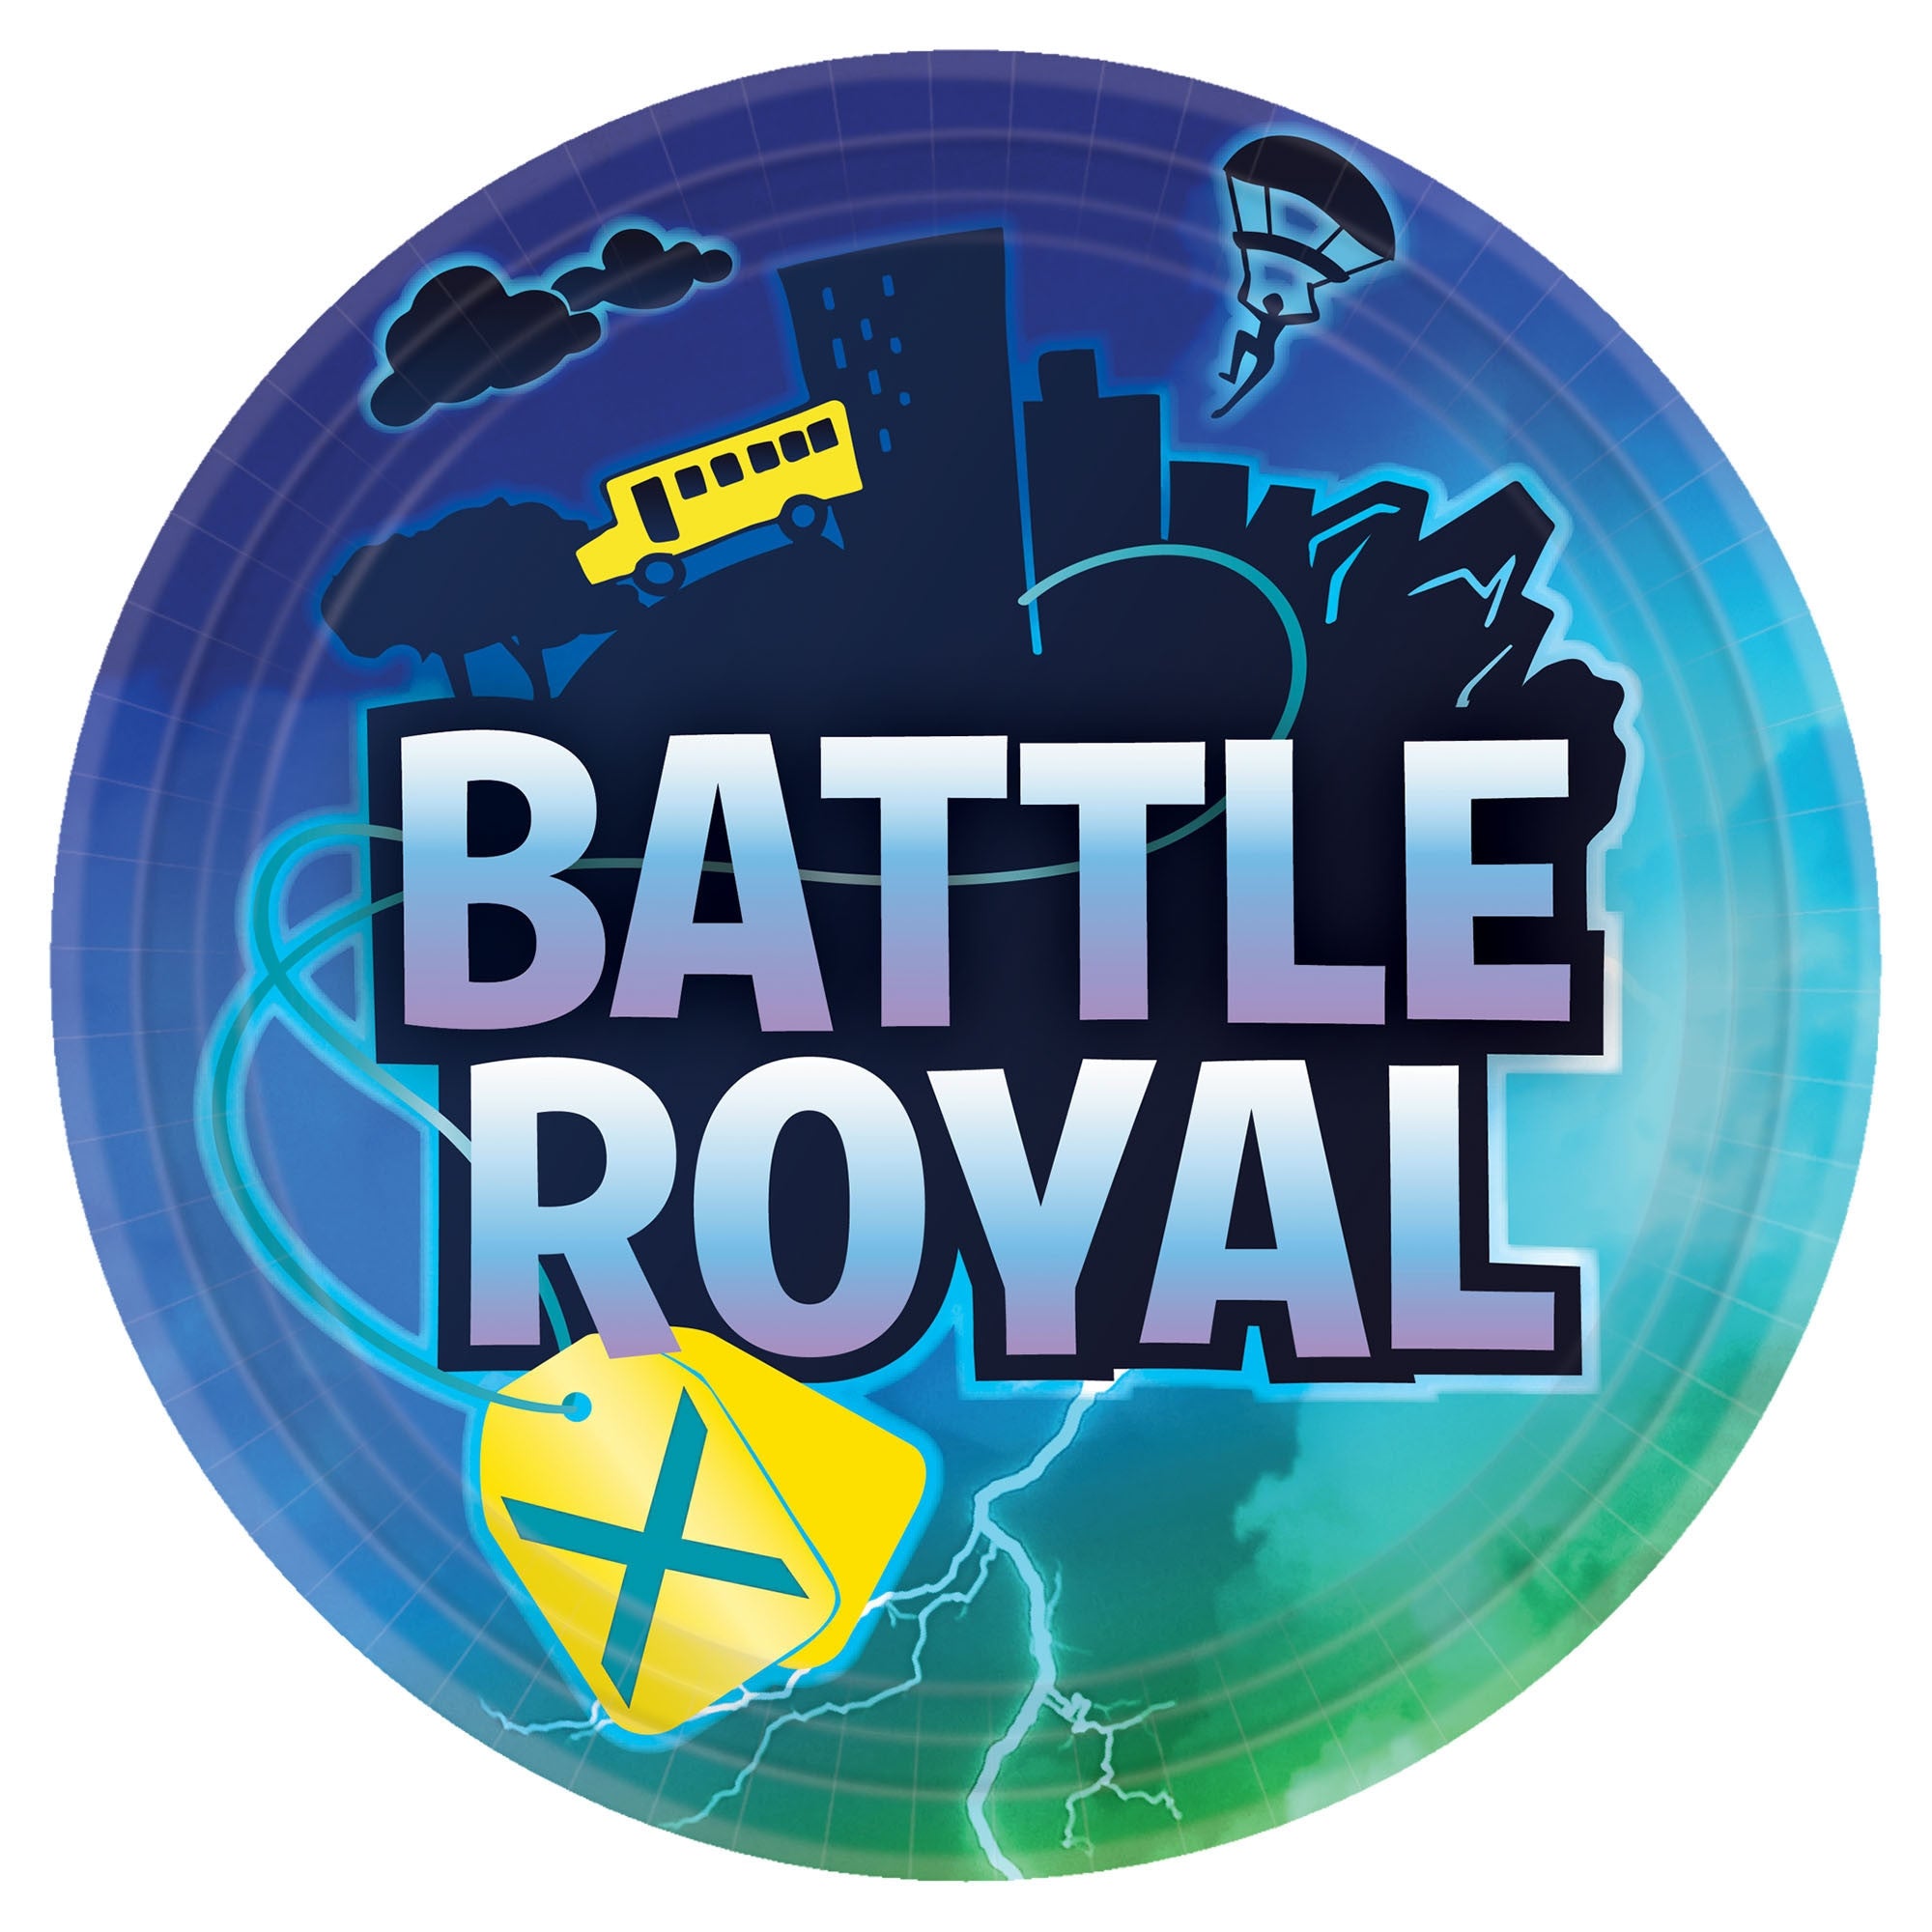 Battle Royal Round Plates, 9"